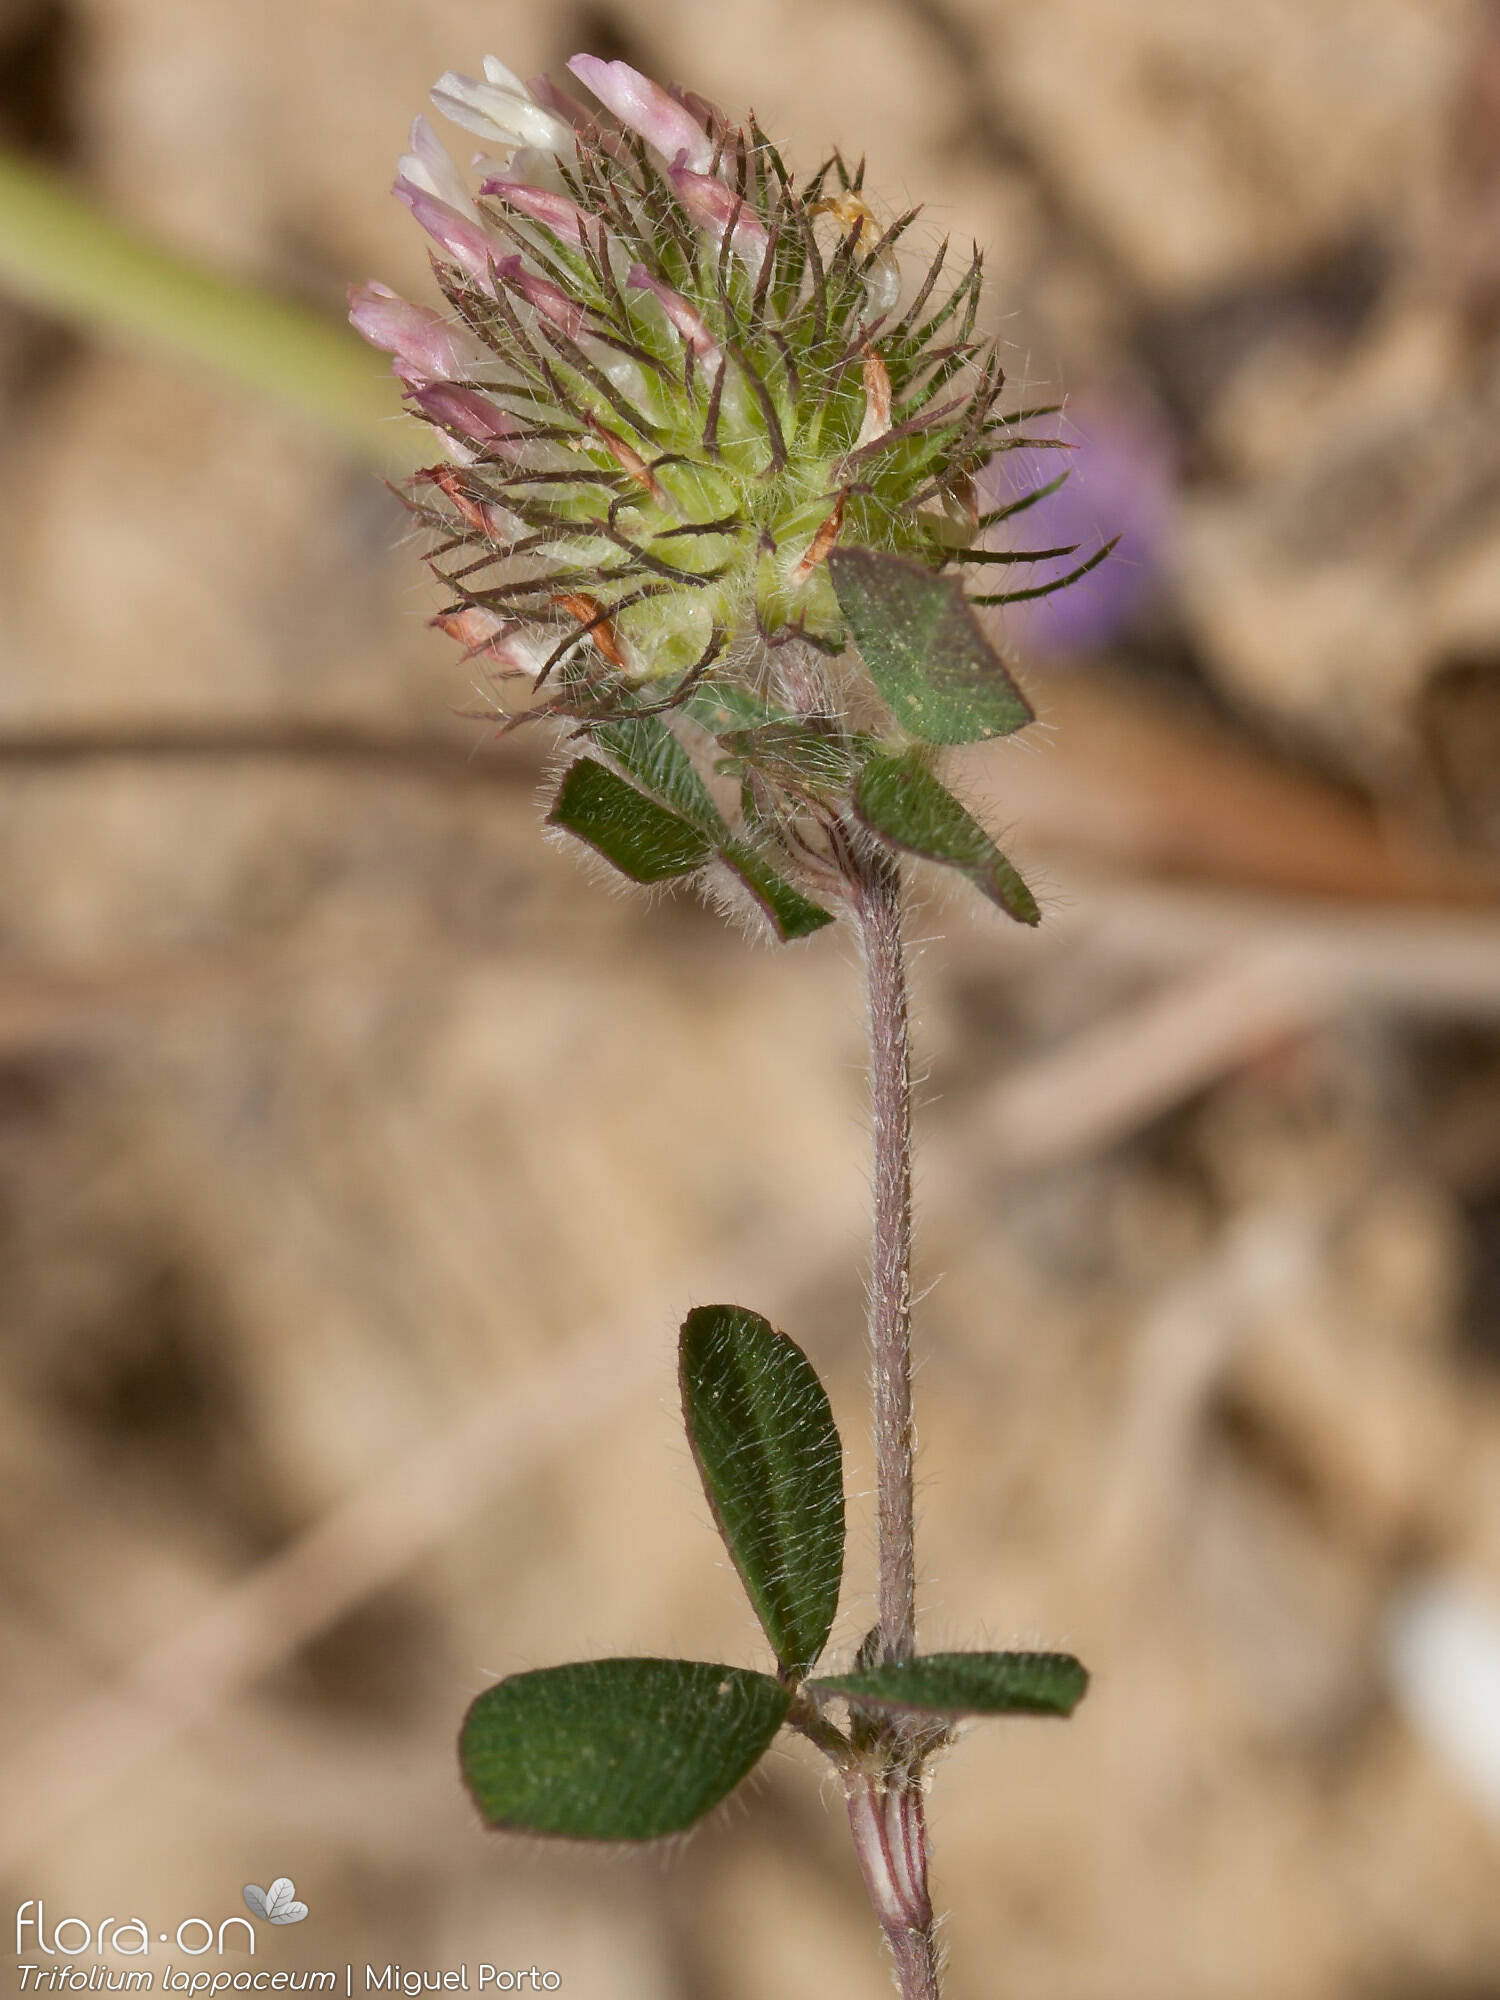 Trifolium lappaceum - Flor (geral) | Miguel Porto; CC BY-NC 4.0